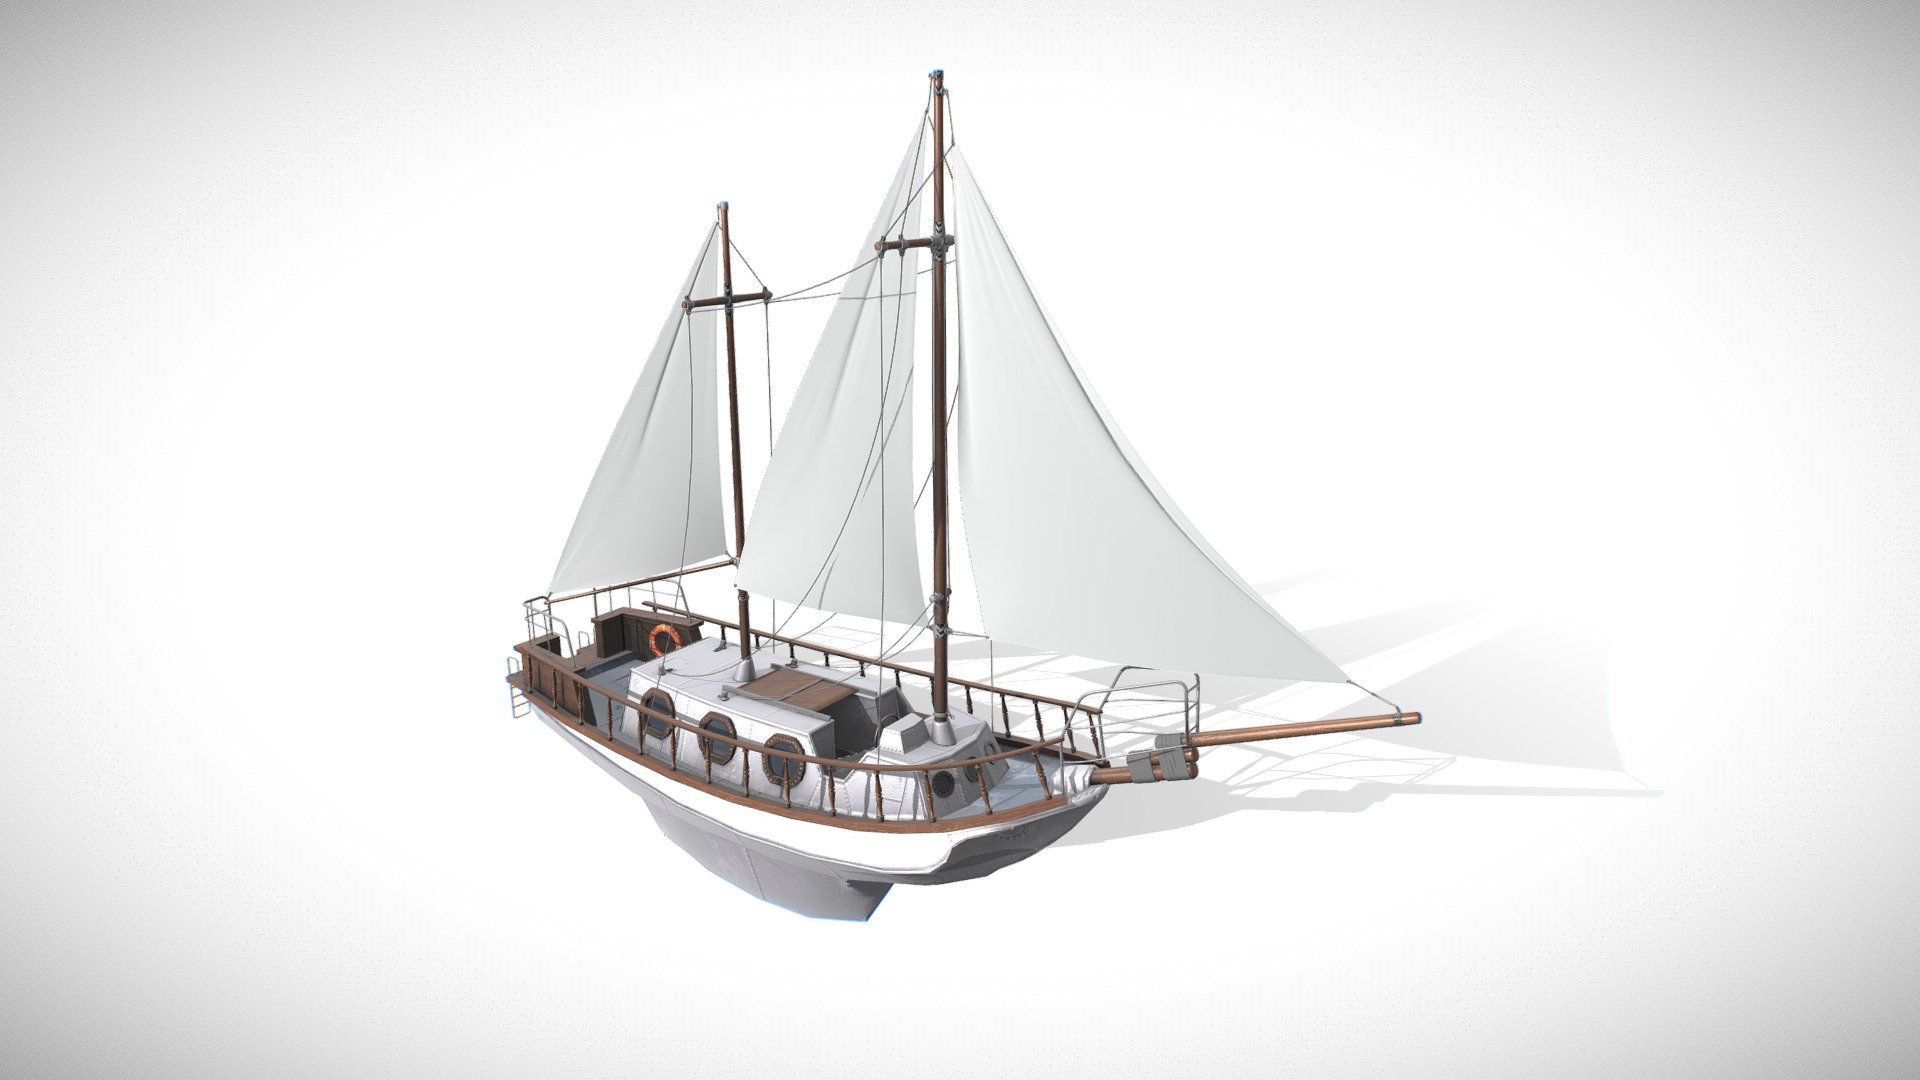 3d model of the yacht - Yacht - 3D model by djkorg 3d model